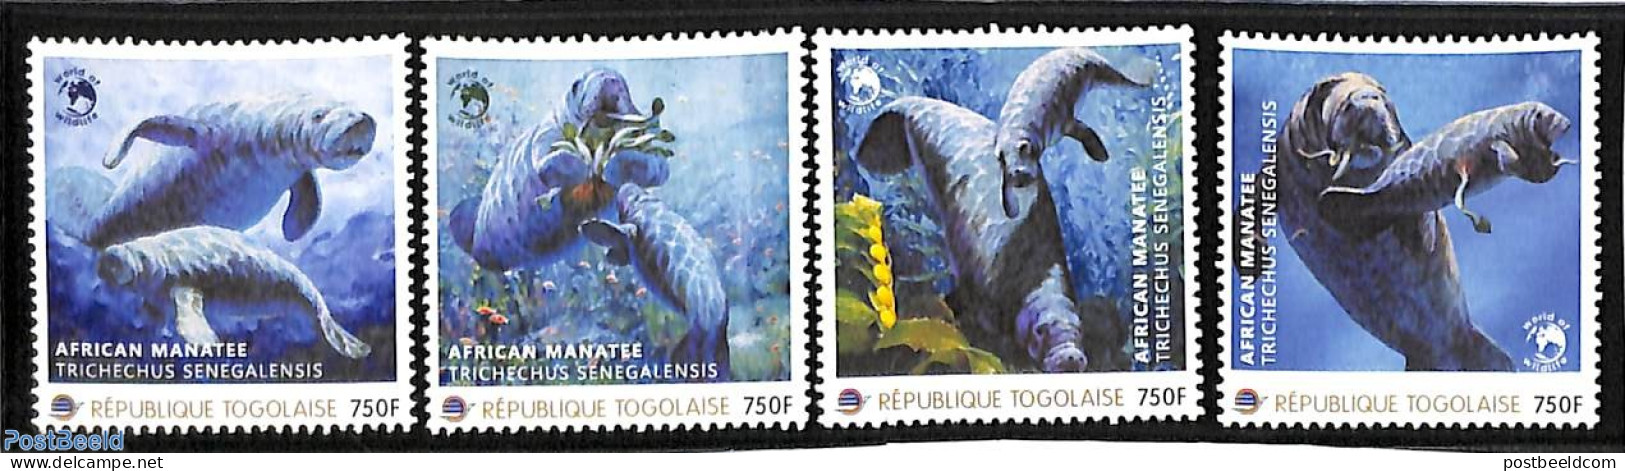 Togo 2012 Personal Stamp Set 4v, Mint NH, Nature - Sea Mammals - Togo (1960-...)